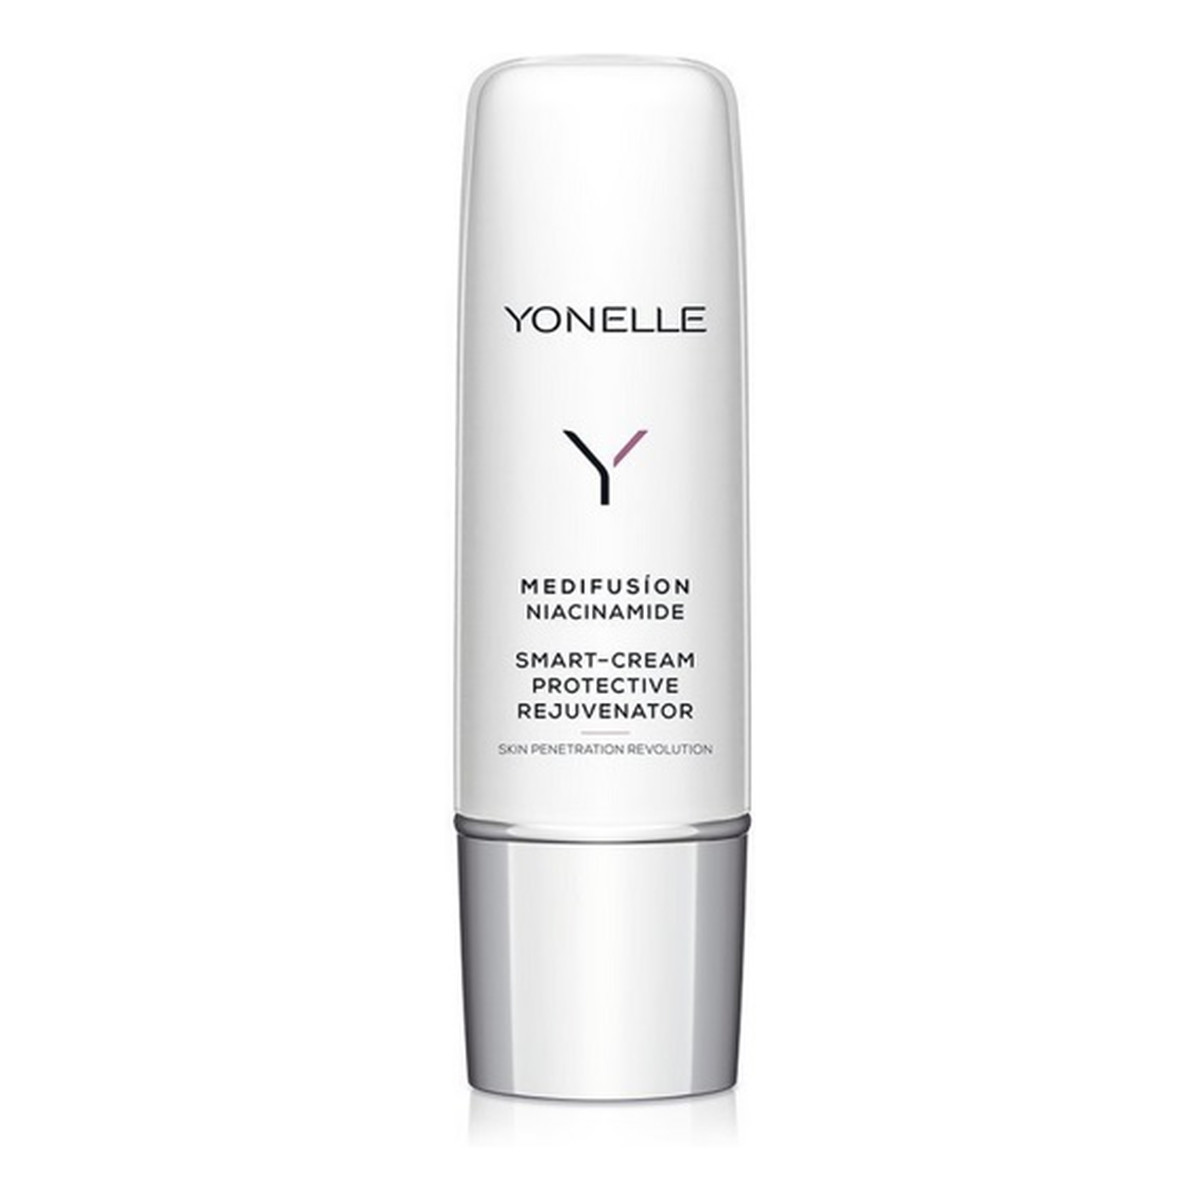 Yonelle Medifusion Niacinamide Smart-Cream Protective Rejuvenator Krem z niacynamidem chroniący młodość skóry 50ml